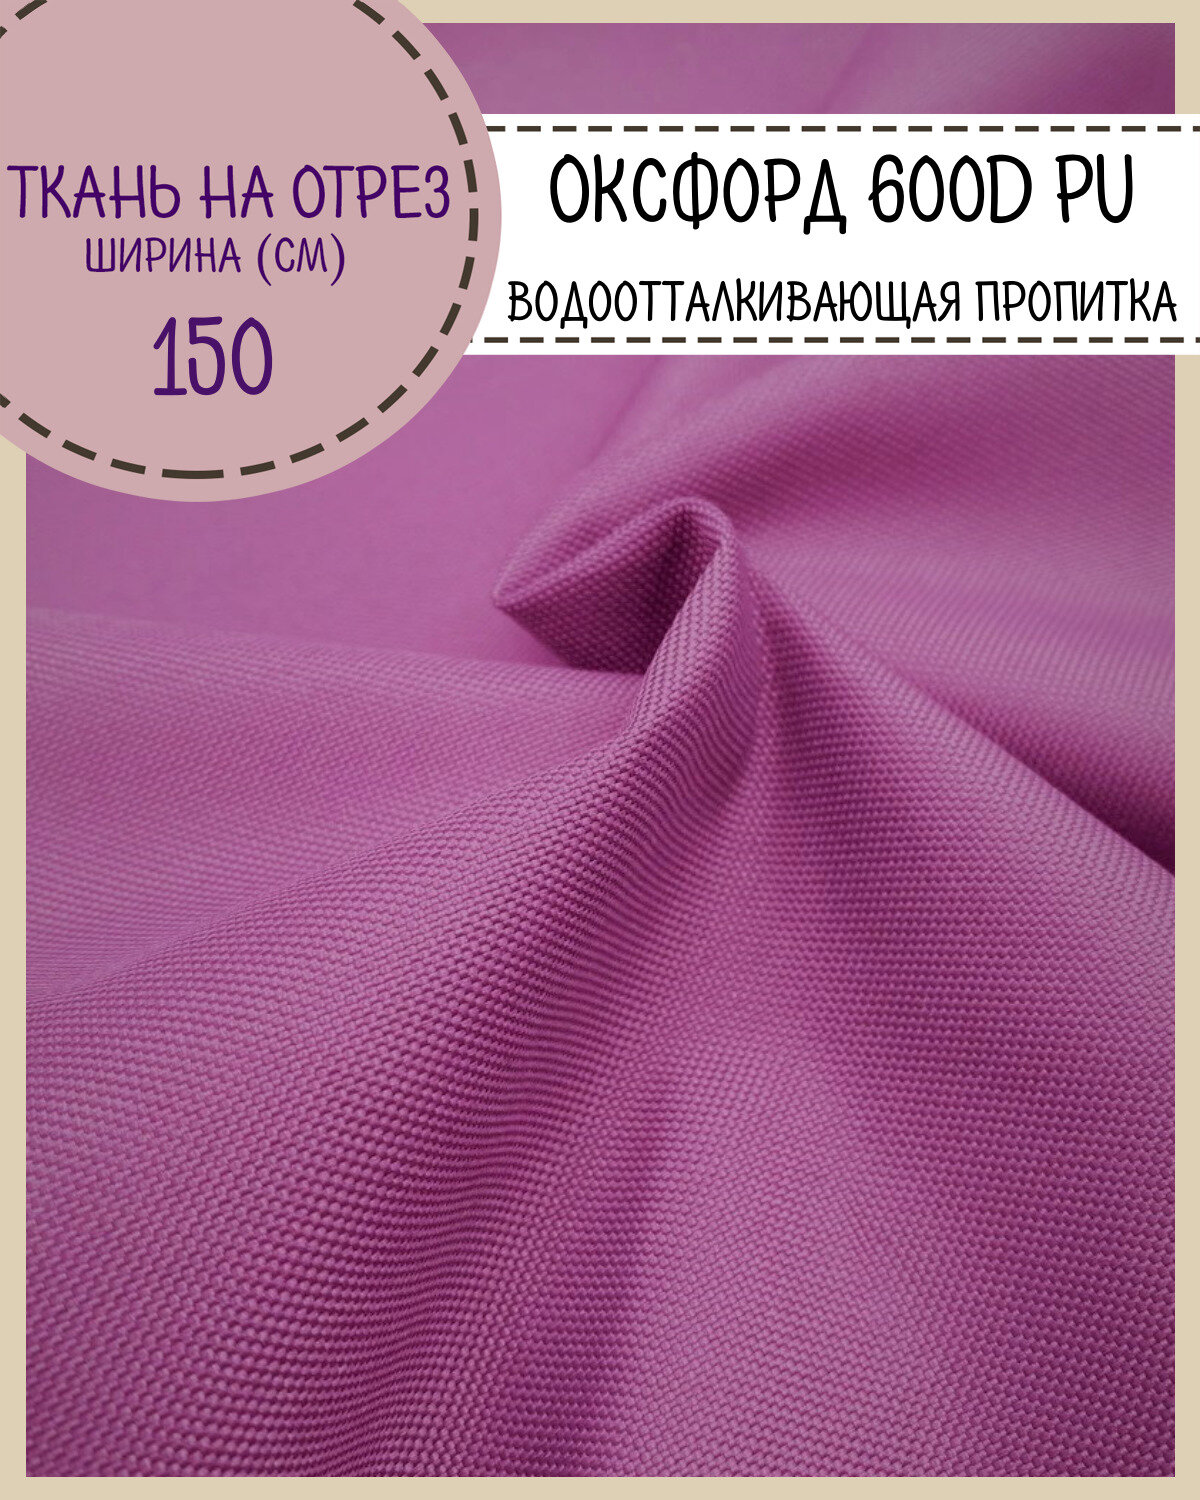 Ткань Оксфорд Oxford 600D PU 1000, пропитка водоотталкивающая, цв. лиловый, ш-150 см, на отрез, цена за пог. метр